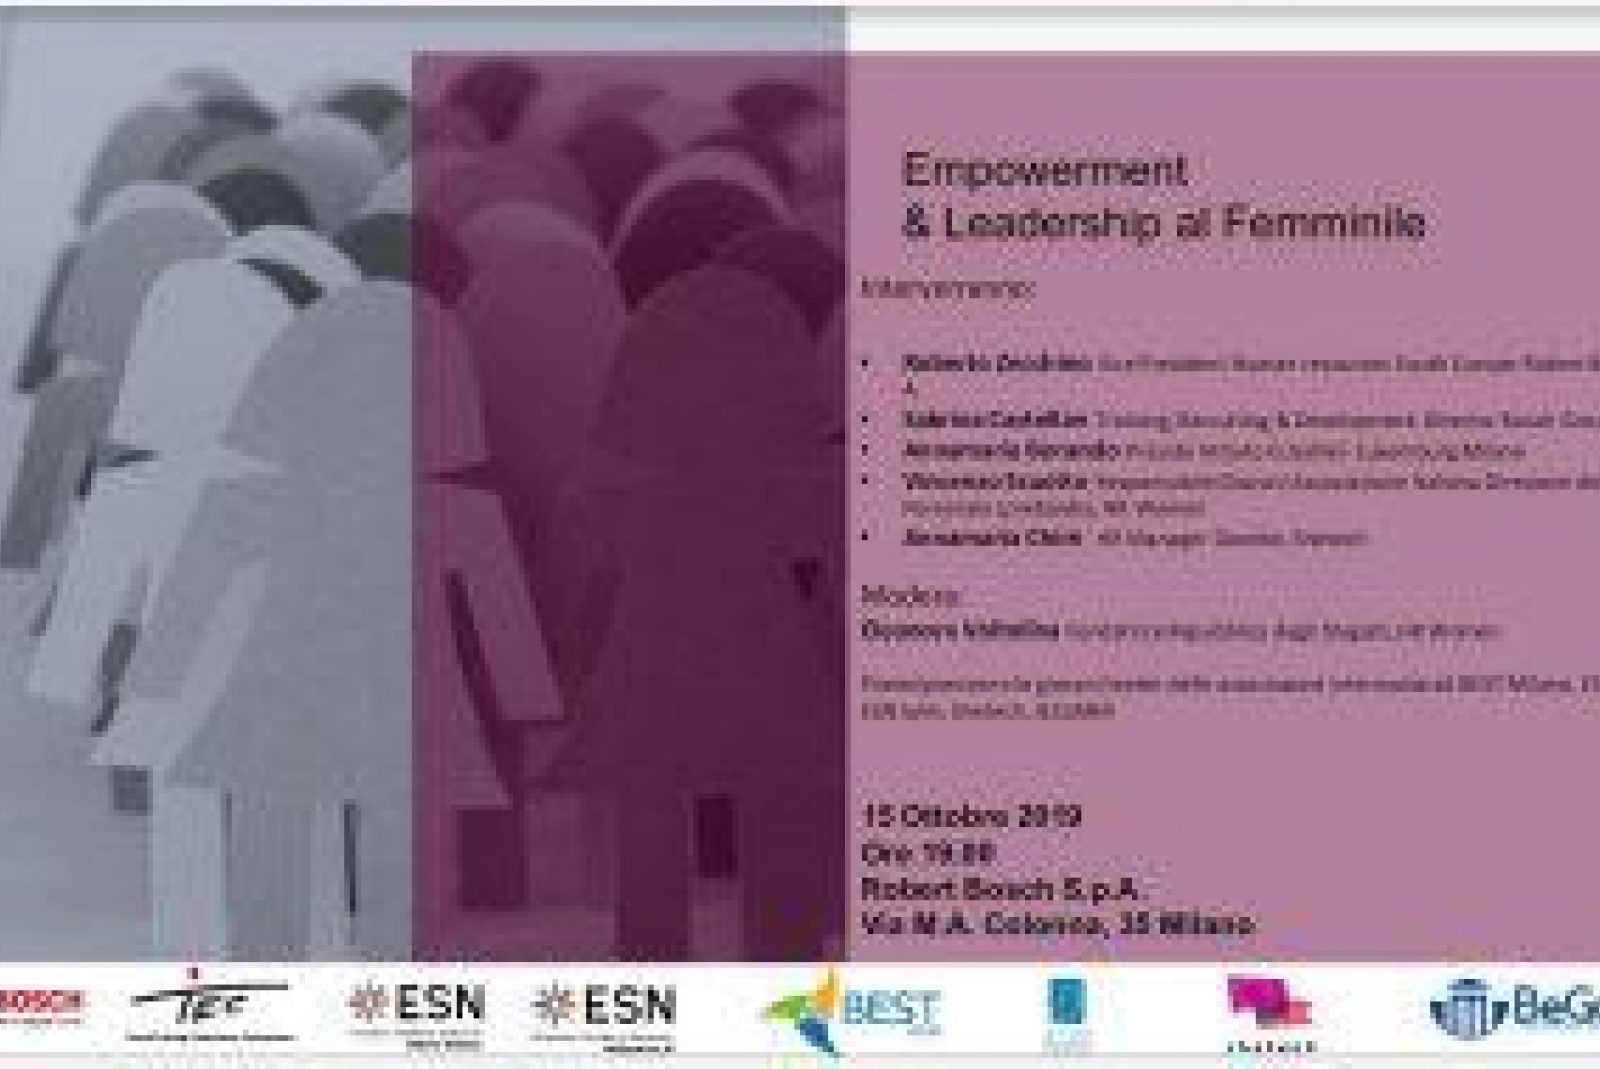 Women Empowerment & Leadership